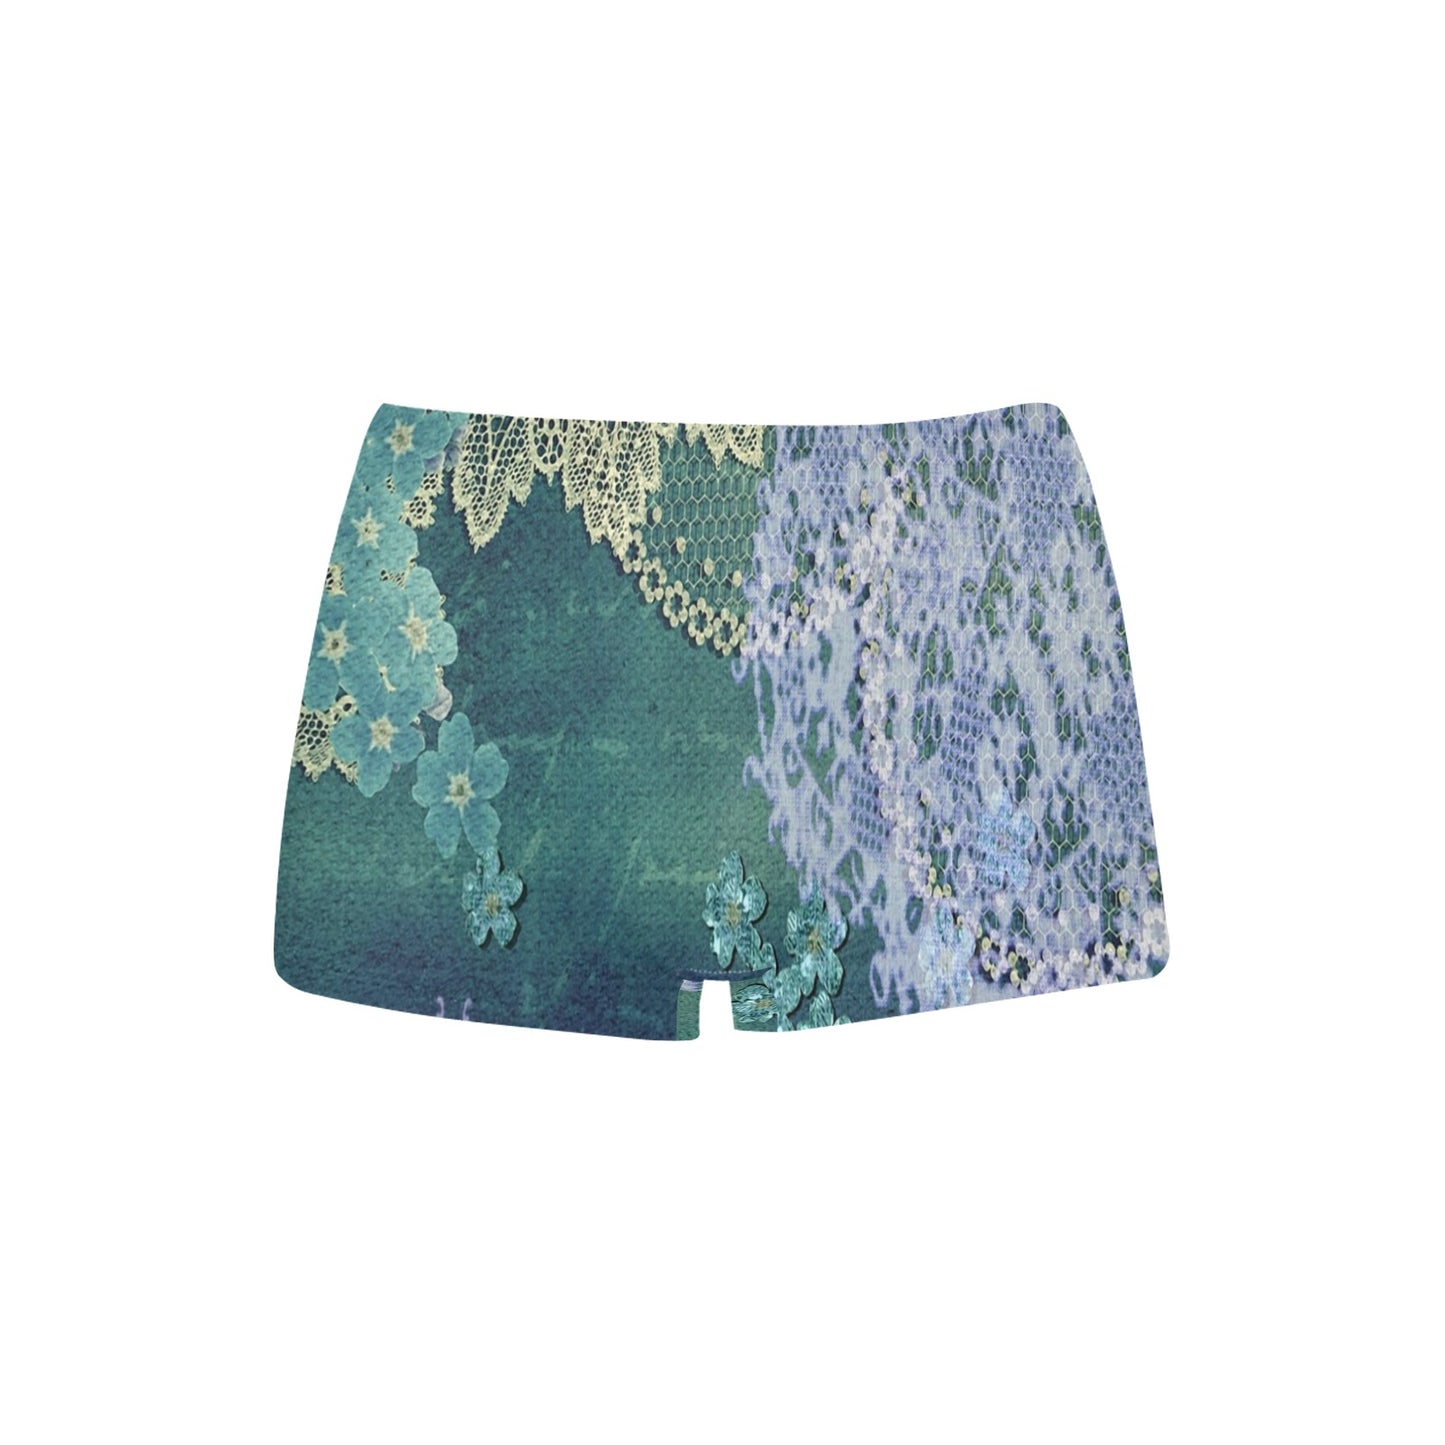 Printed Lace Boyshorts, daisy dukes, pum pum shorts, shortie shorts , design 05